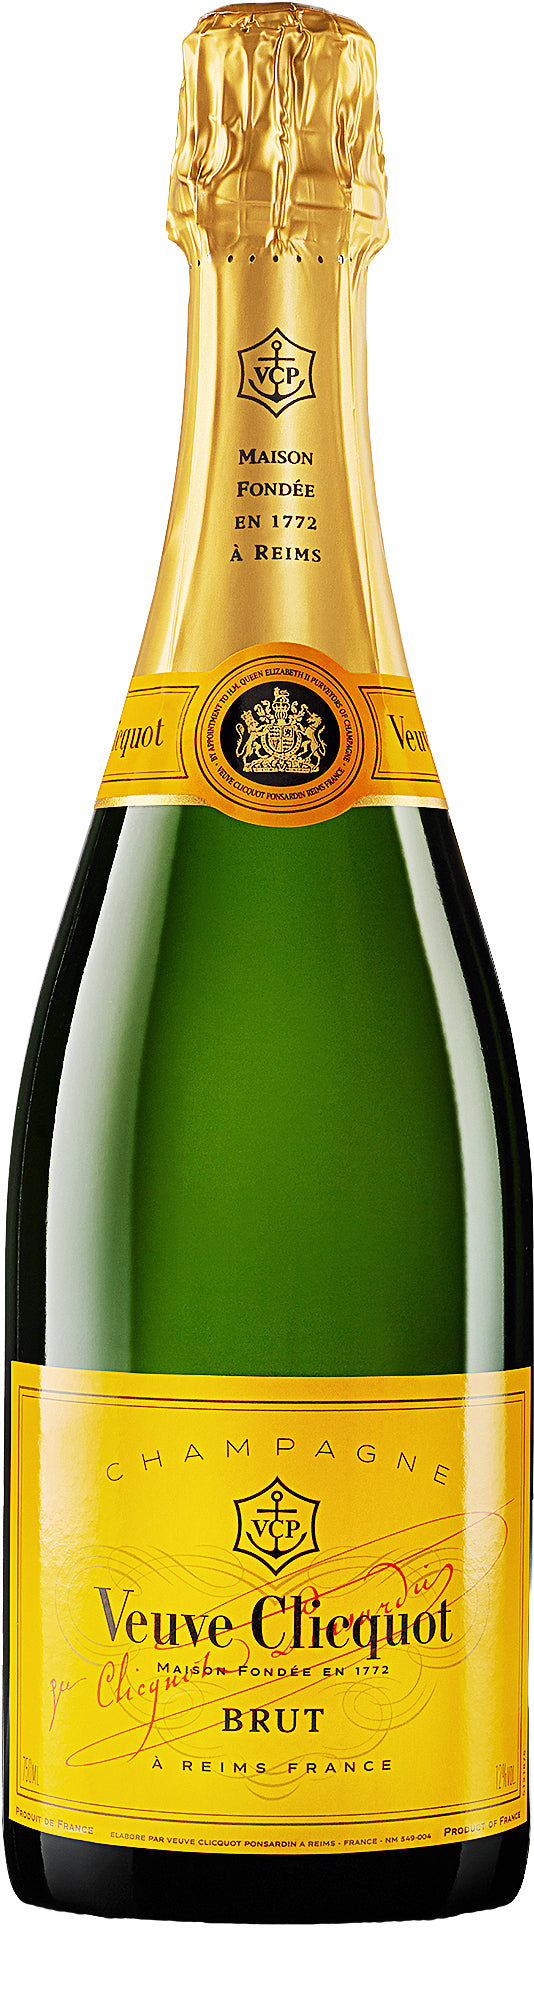 Veuve Clicquot Yellow Label Brut Champagne NV 750 ml.